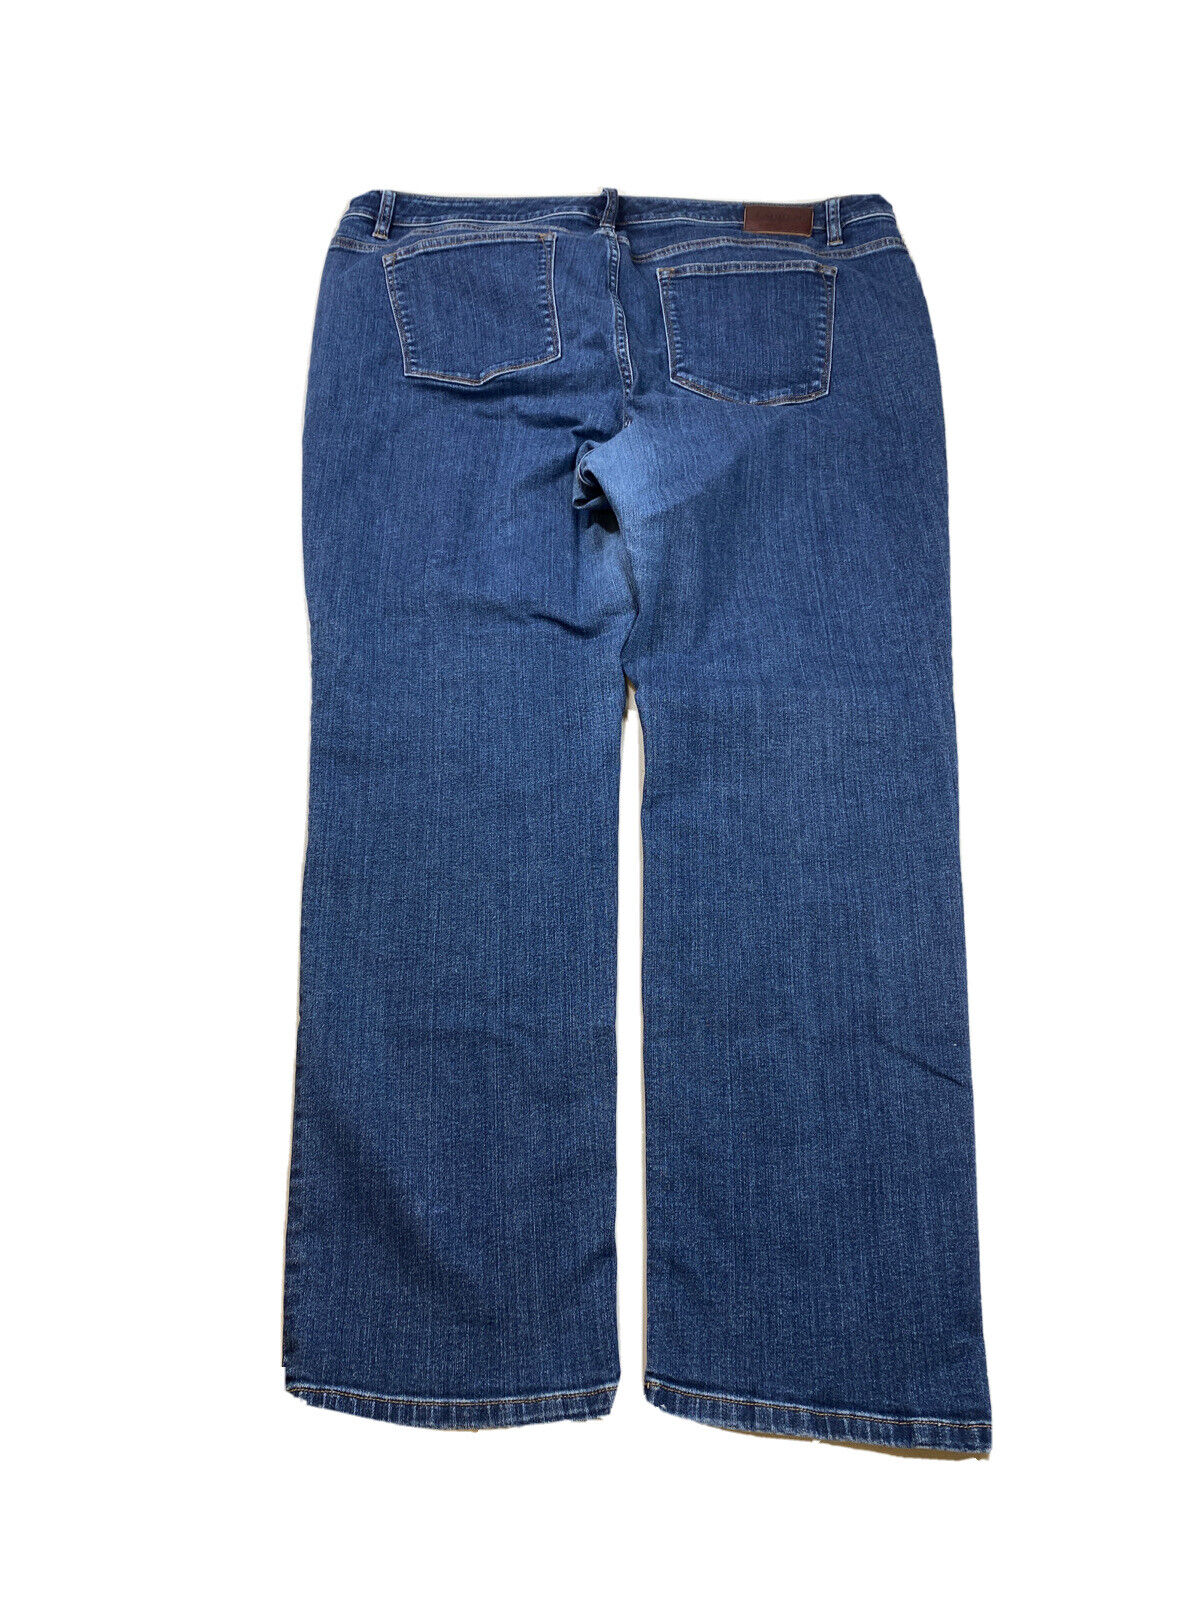 Lauren Ralph Lauren Women's Medium Wash Premier Straight Denim Jeans - 18